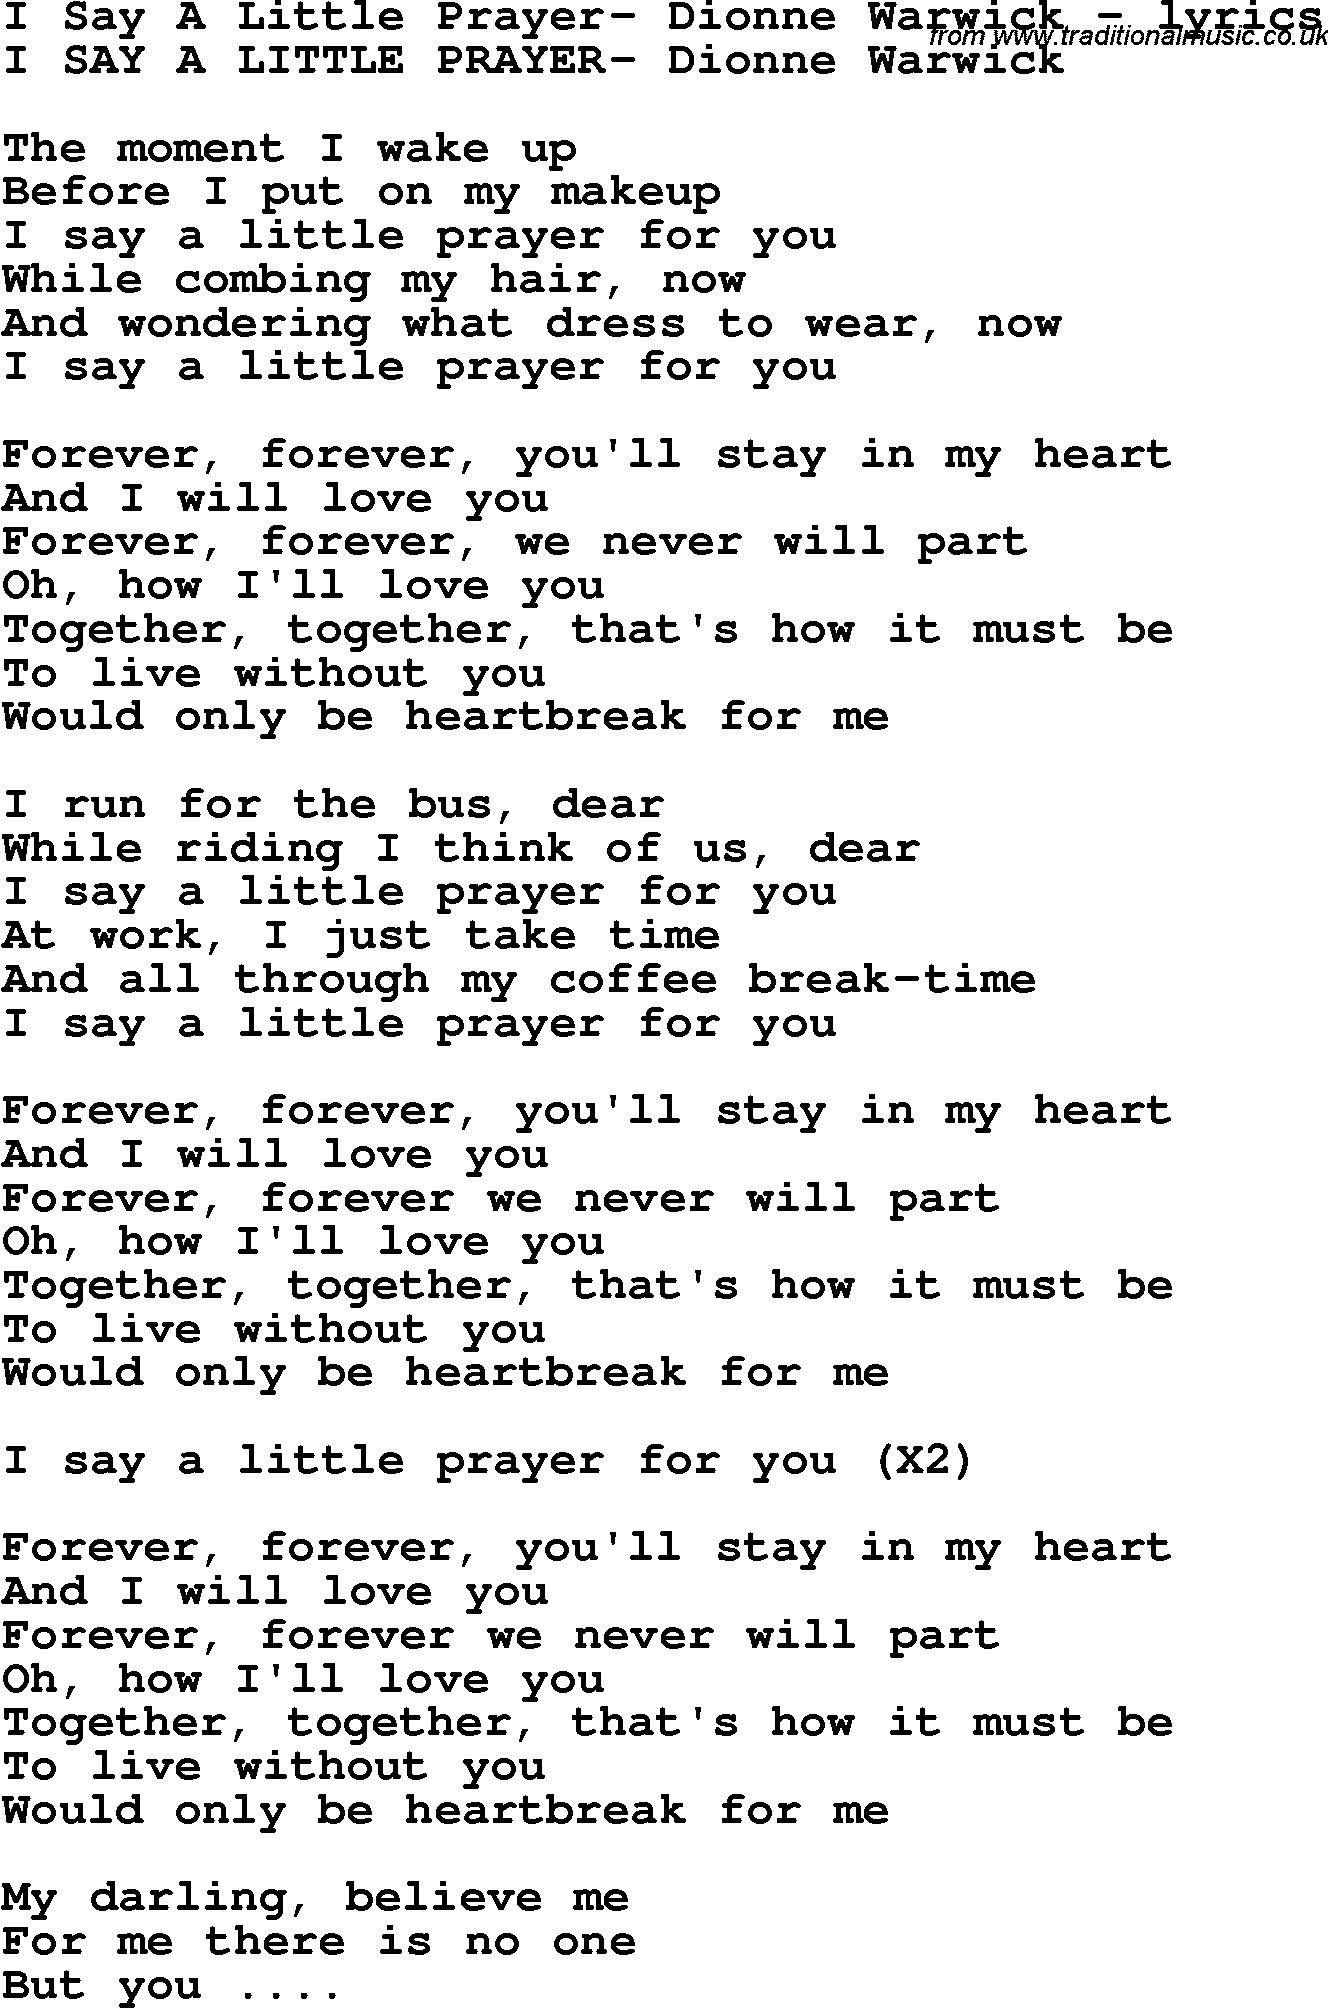 Love Song Lyrics for: I Say A Little Prayer- Dionne Warwick